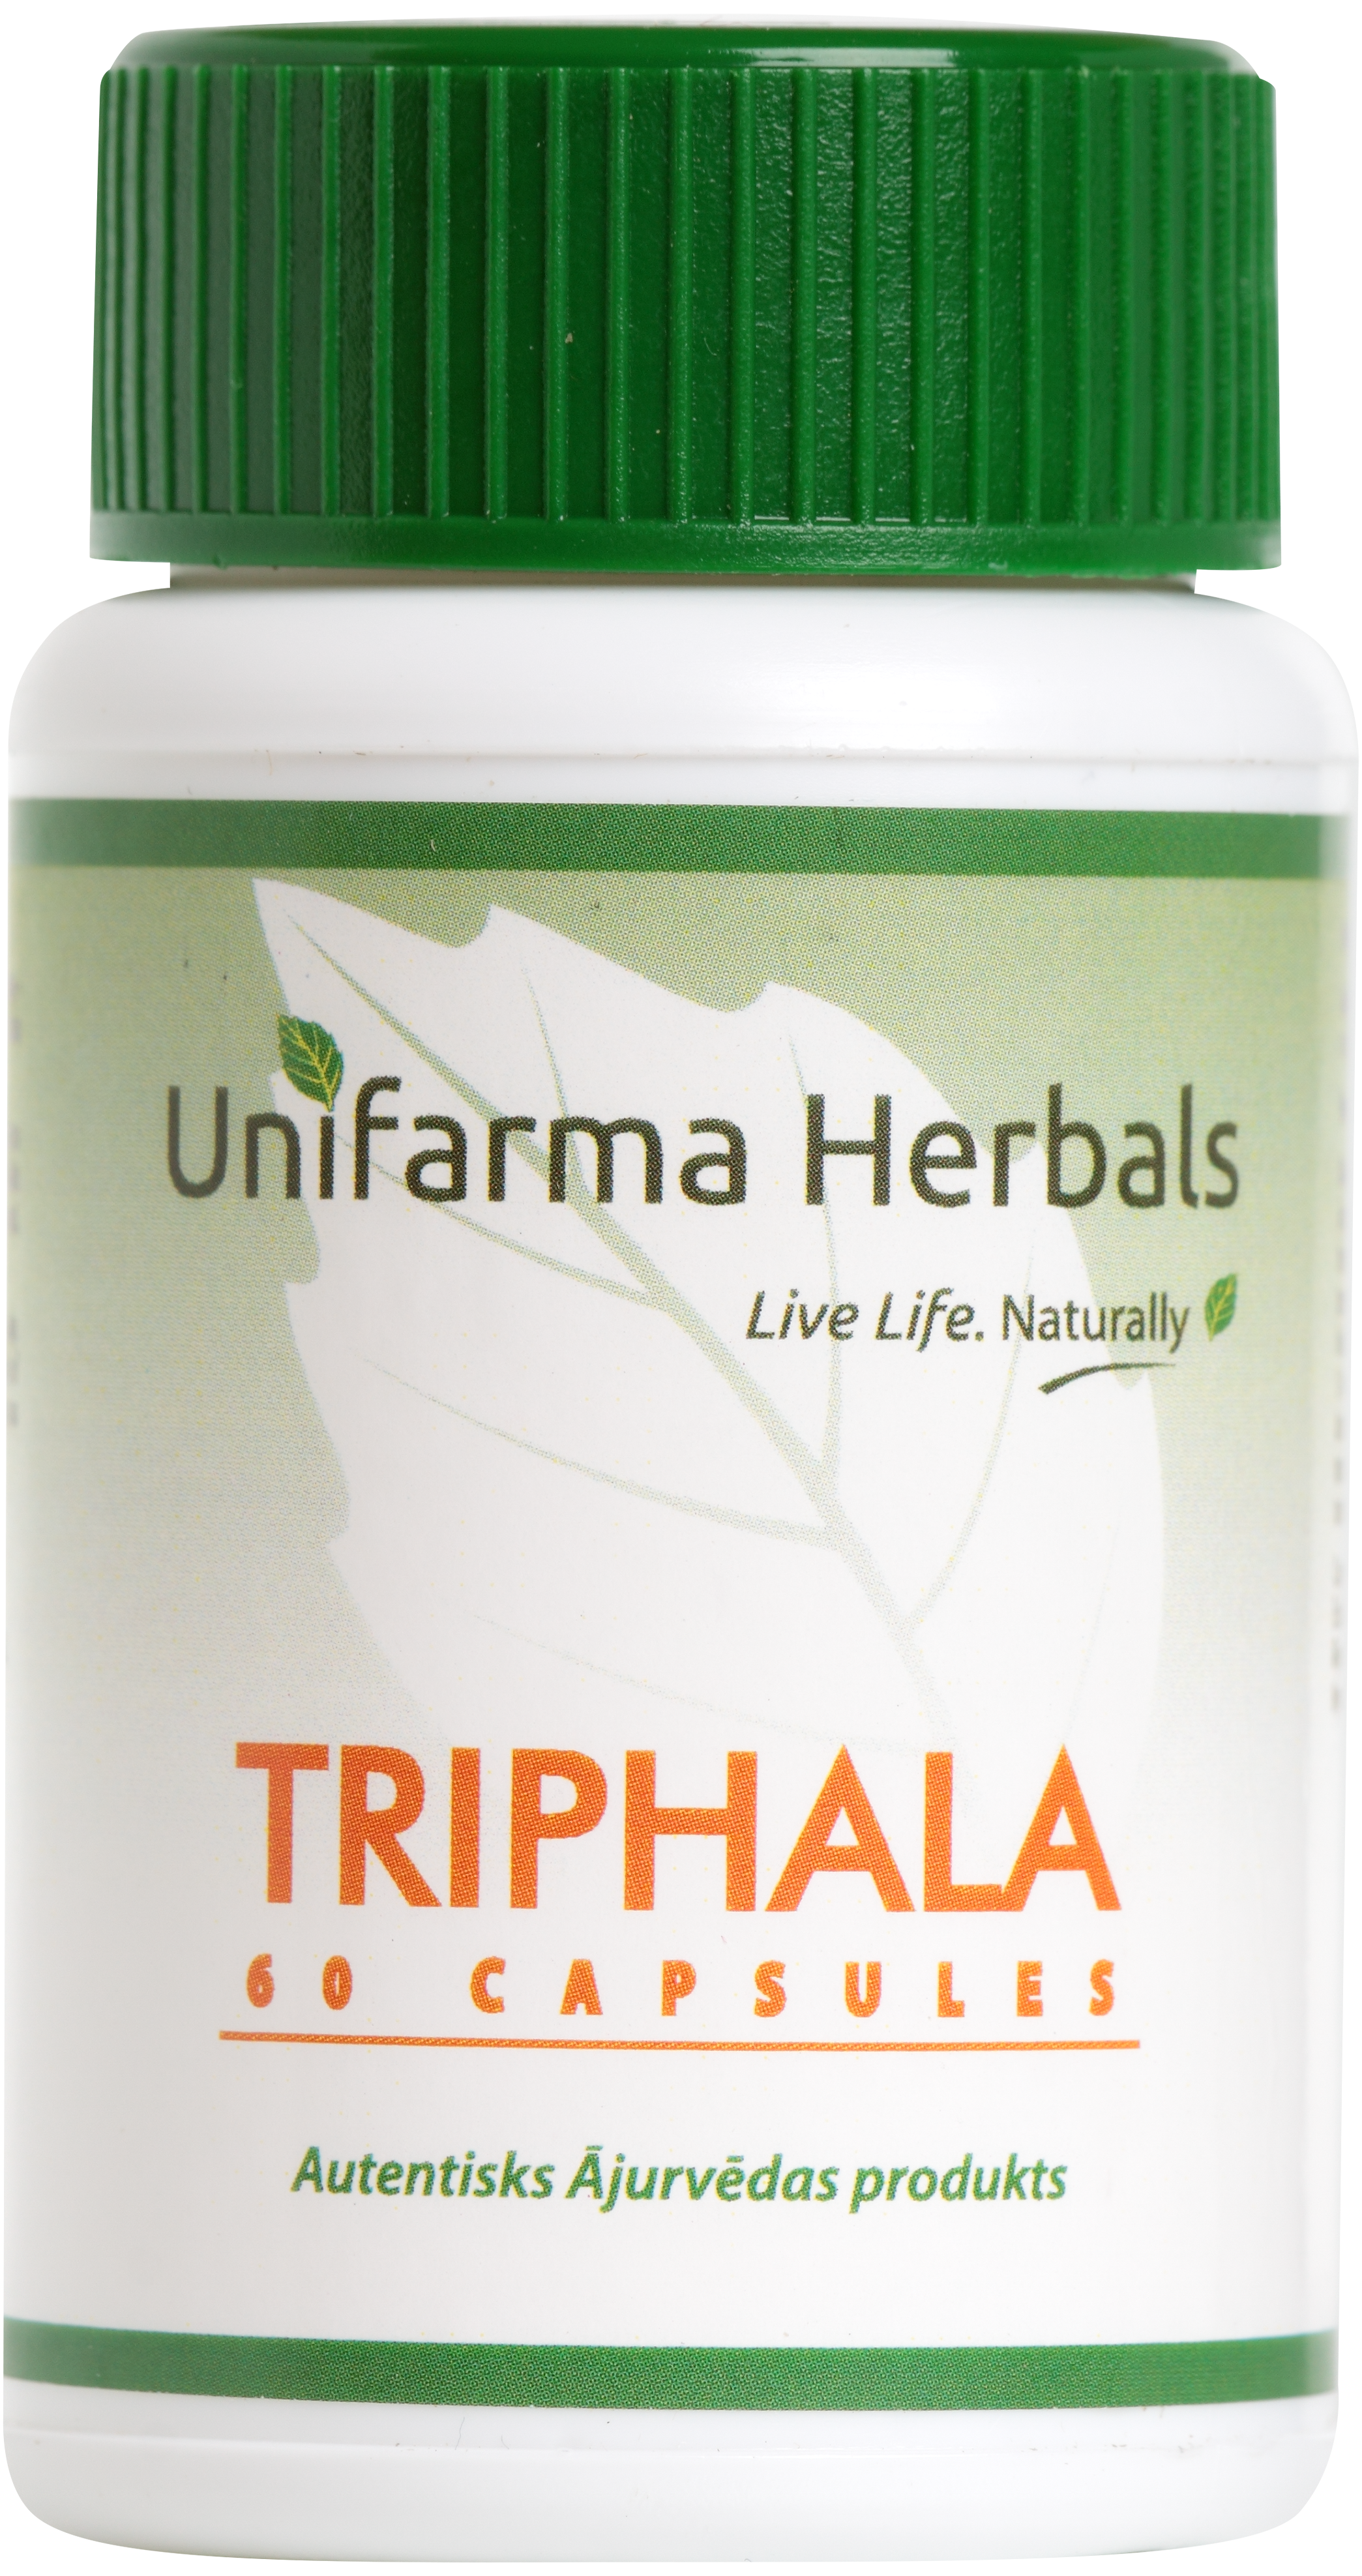 Unifarma Herbals Triphala